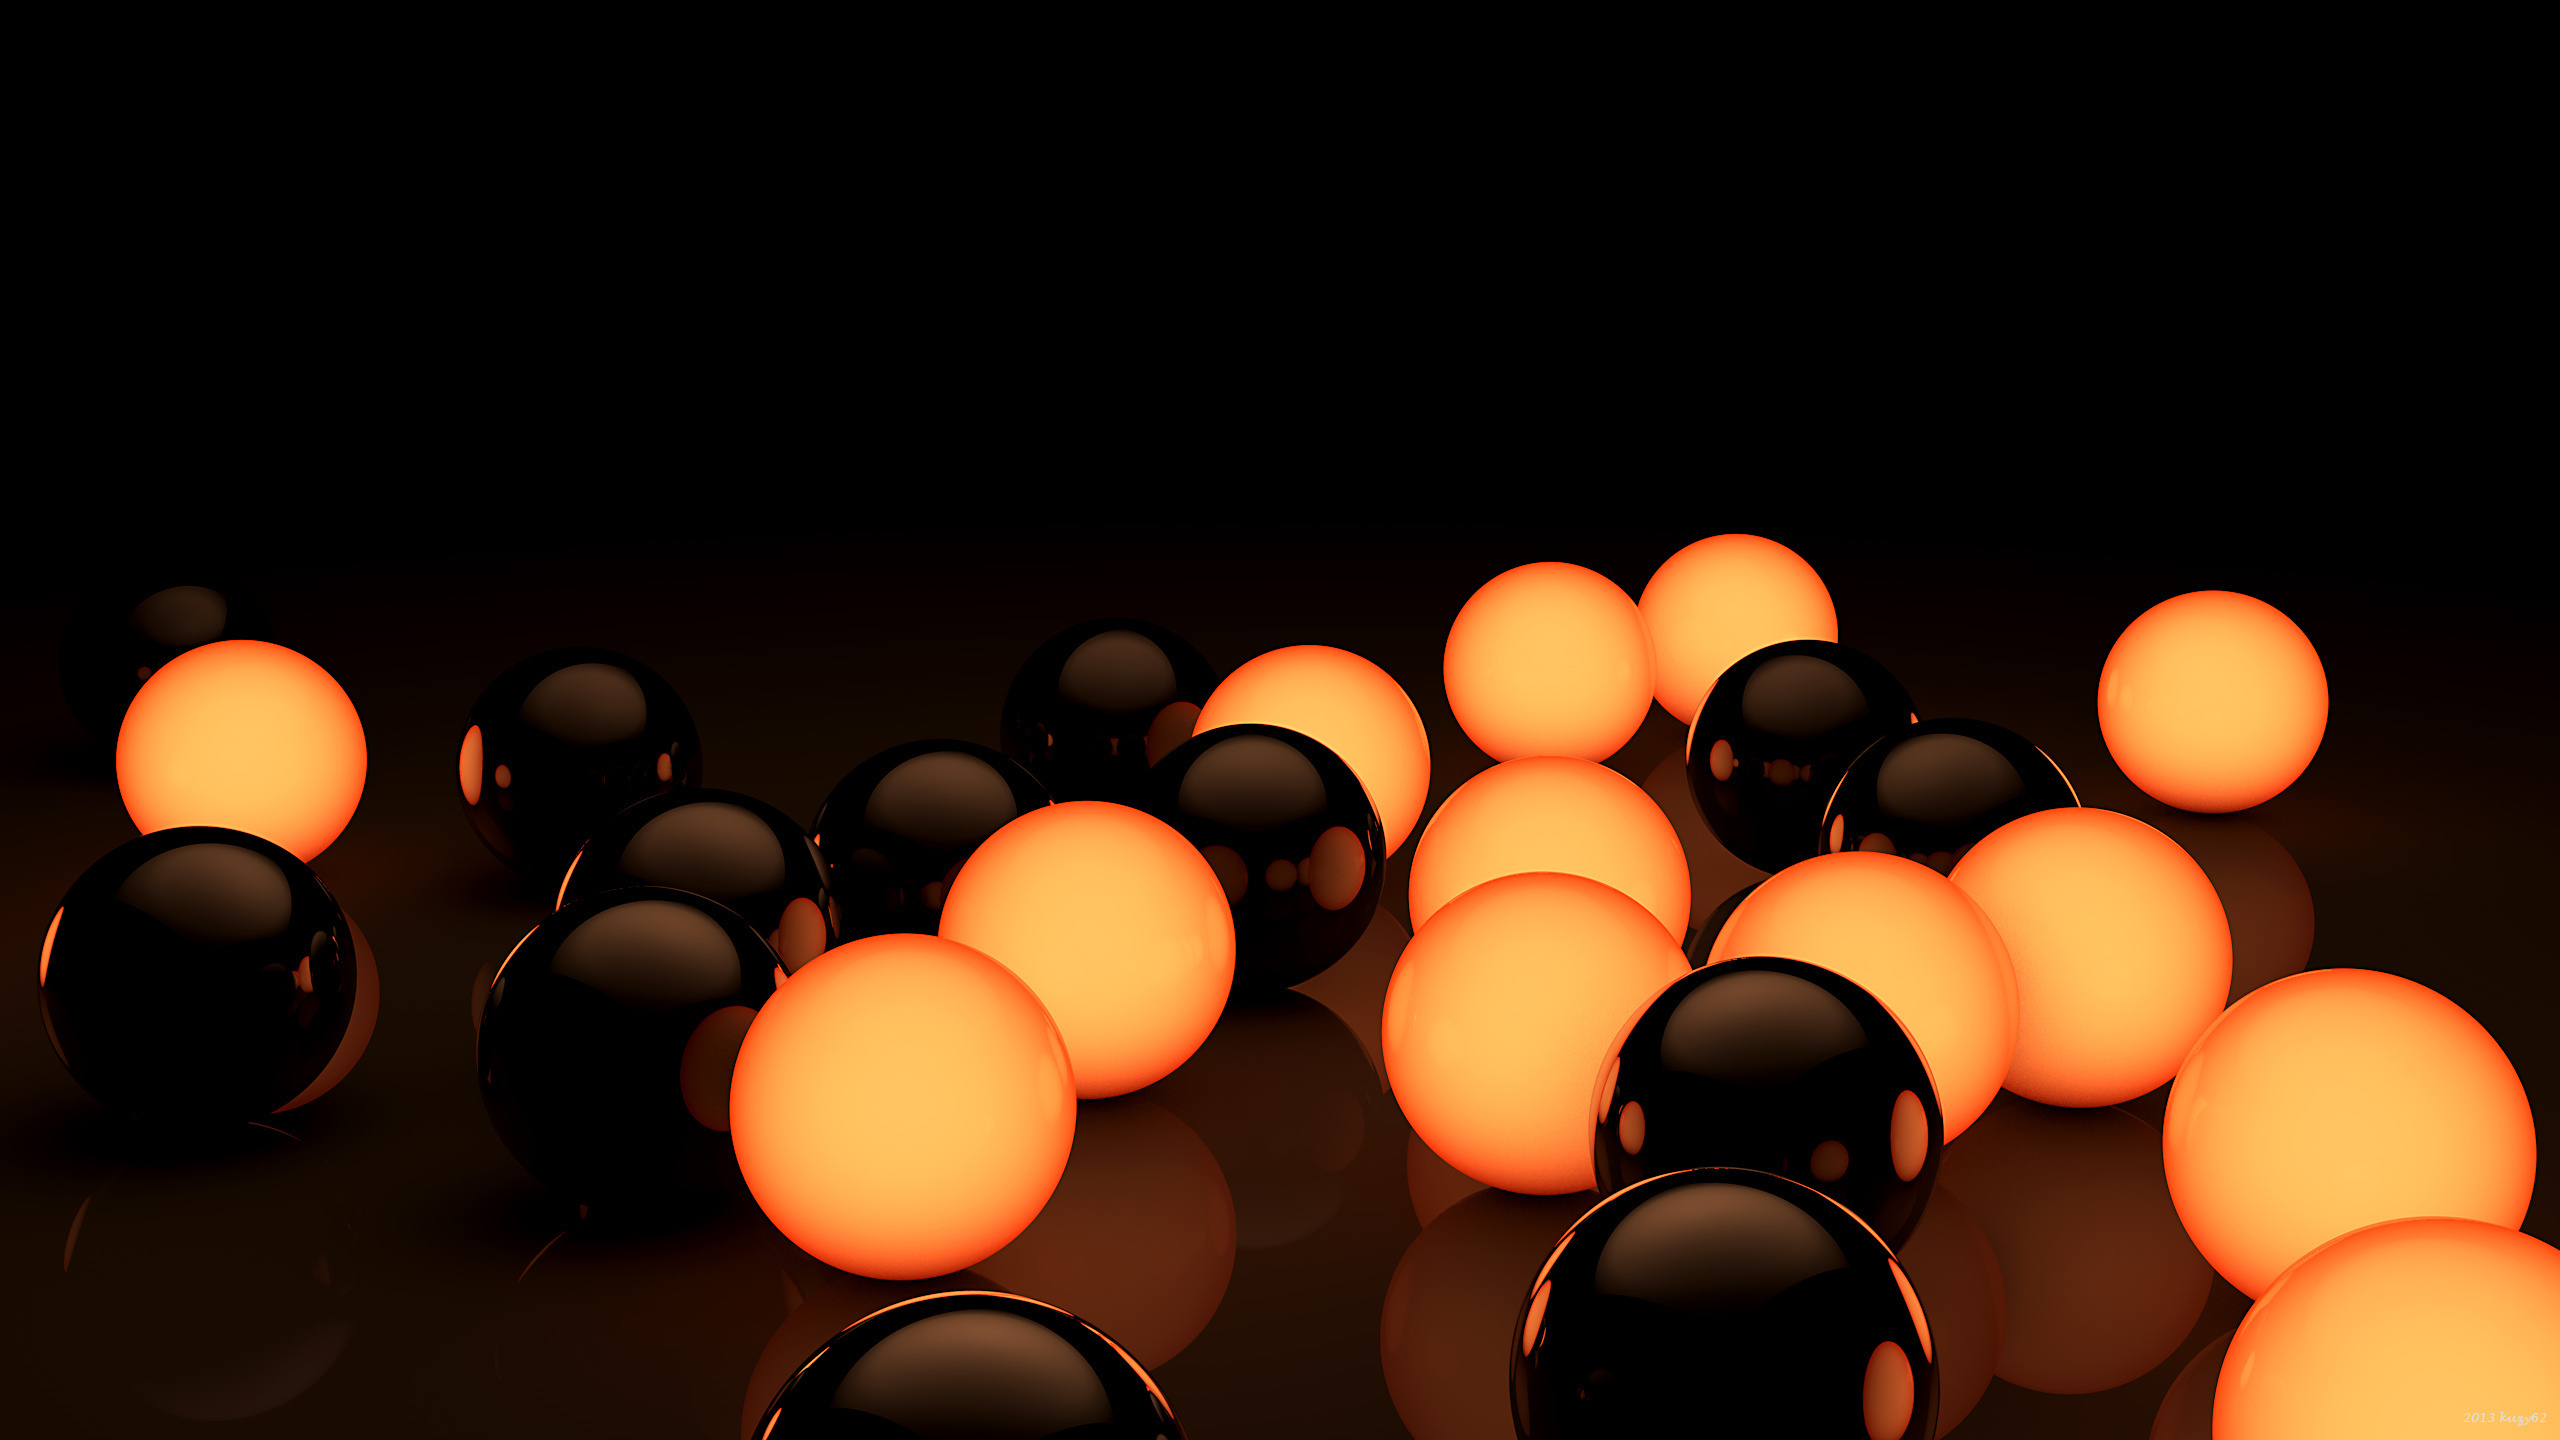 Black And Orange Bubbles In Wallpaper 3d - Orange And Black Balls -  2560x1440 Wallpaper 